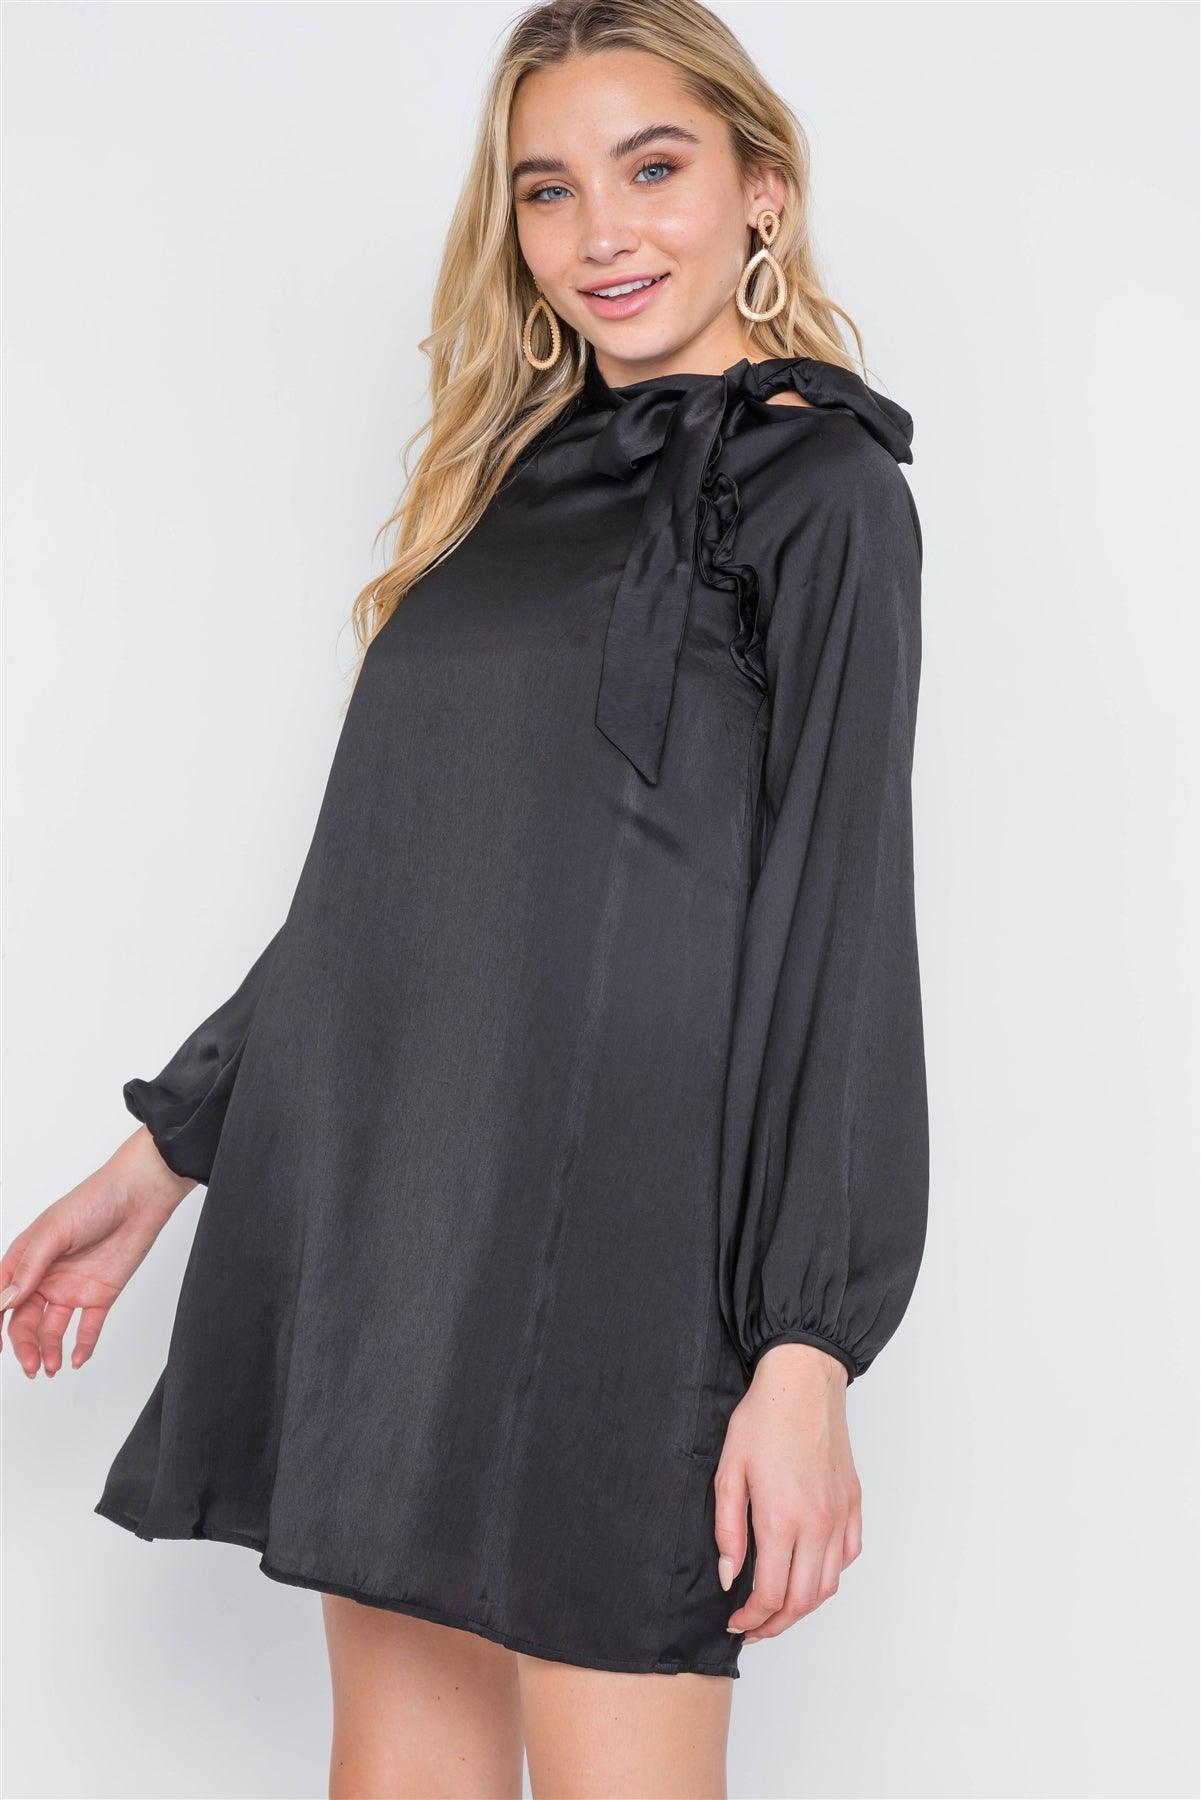 Black Satin Long Balloon Puff Sleeve Side-Tie Mini Dress /2-3-2